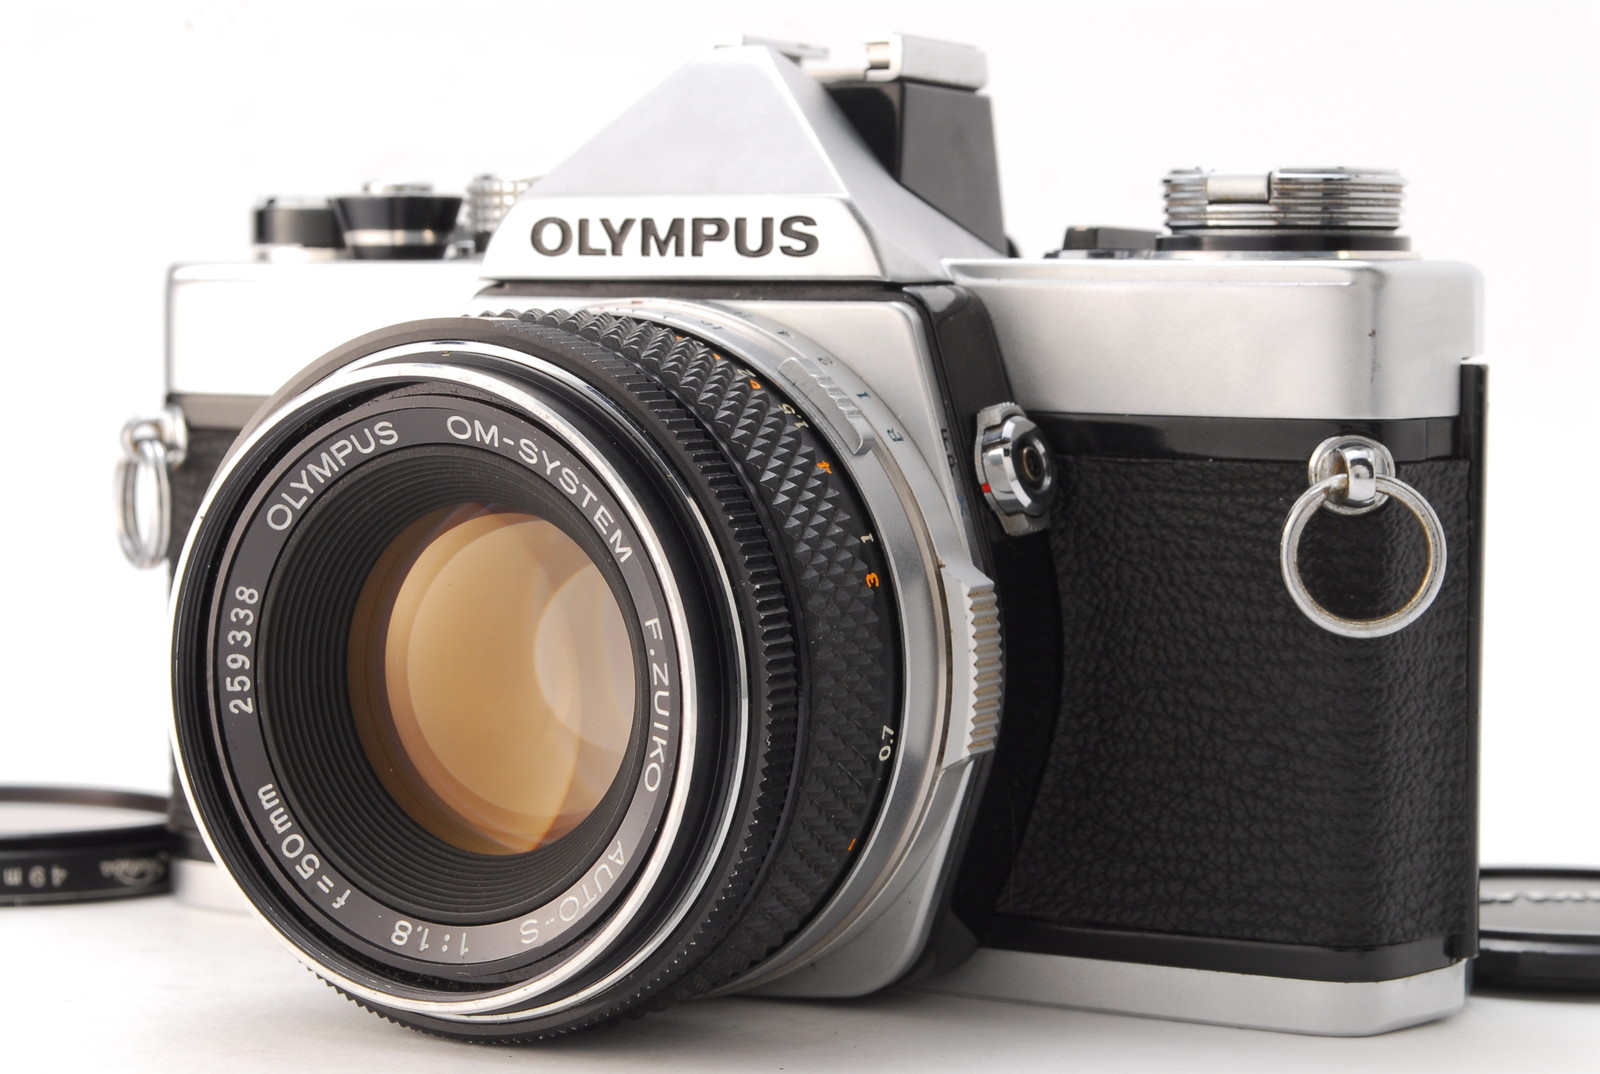 PROMOTION.MECHANISM OVERHAULED Olympus OM-1 35mm SLR, ZUIKO Auto-S 50mm f/1.8 from Japan